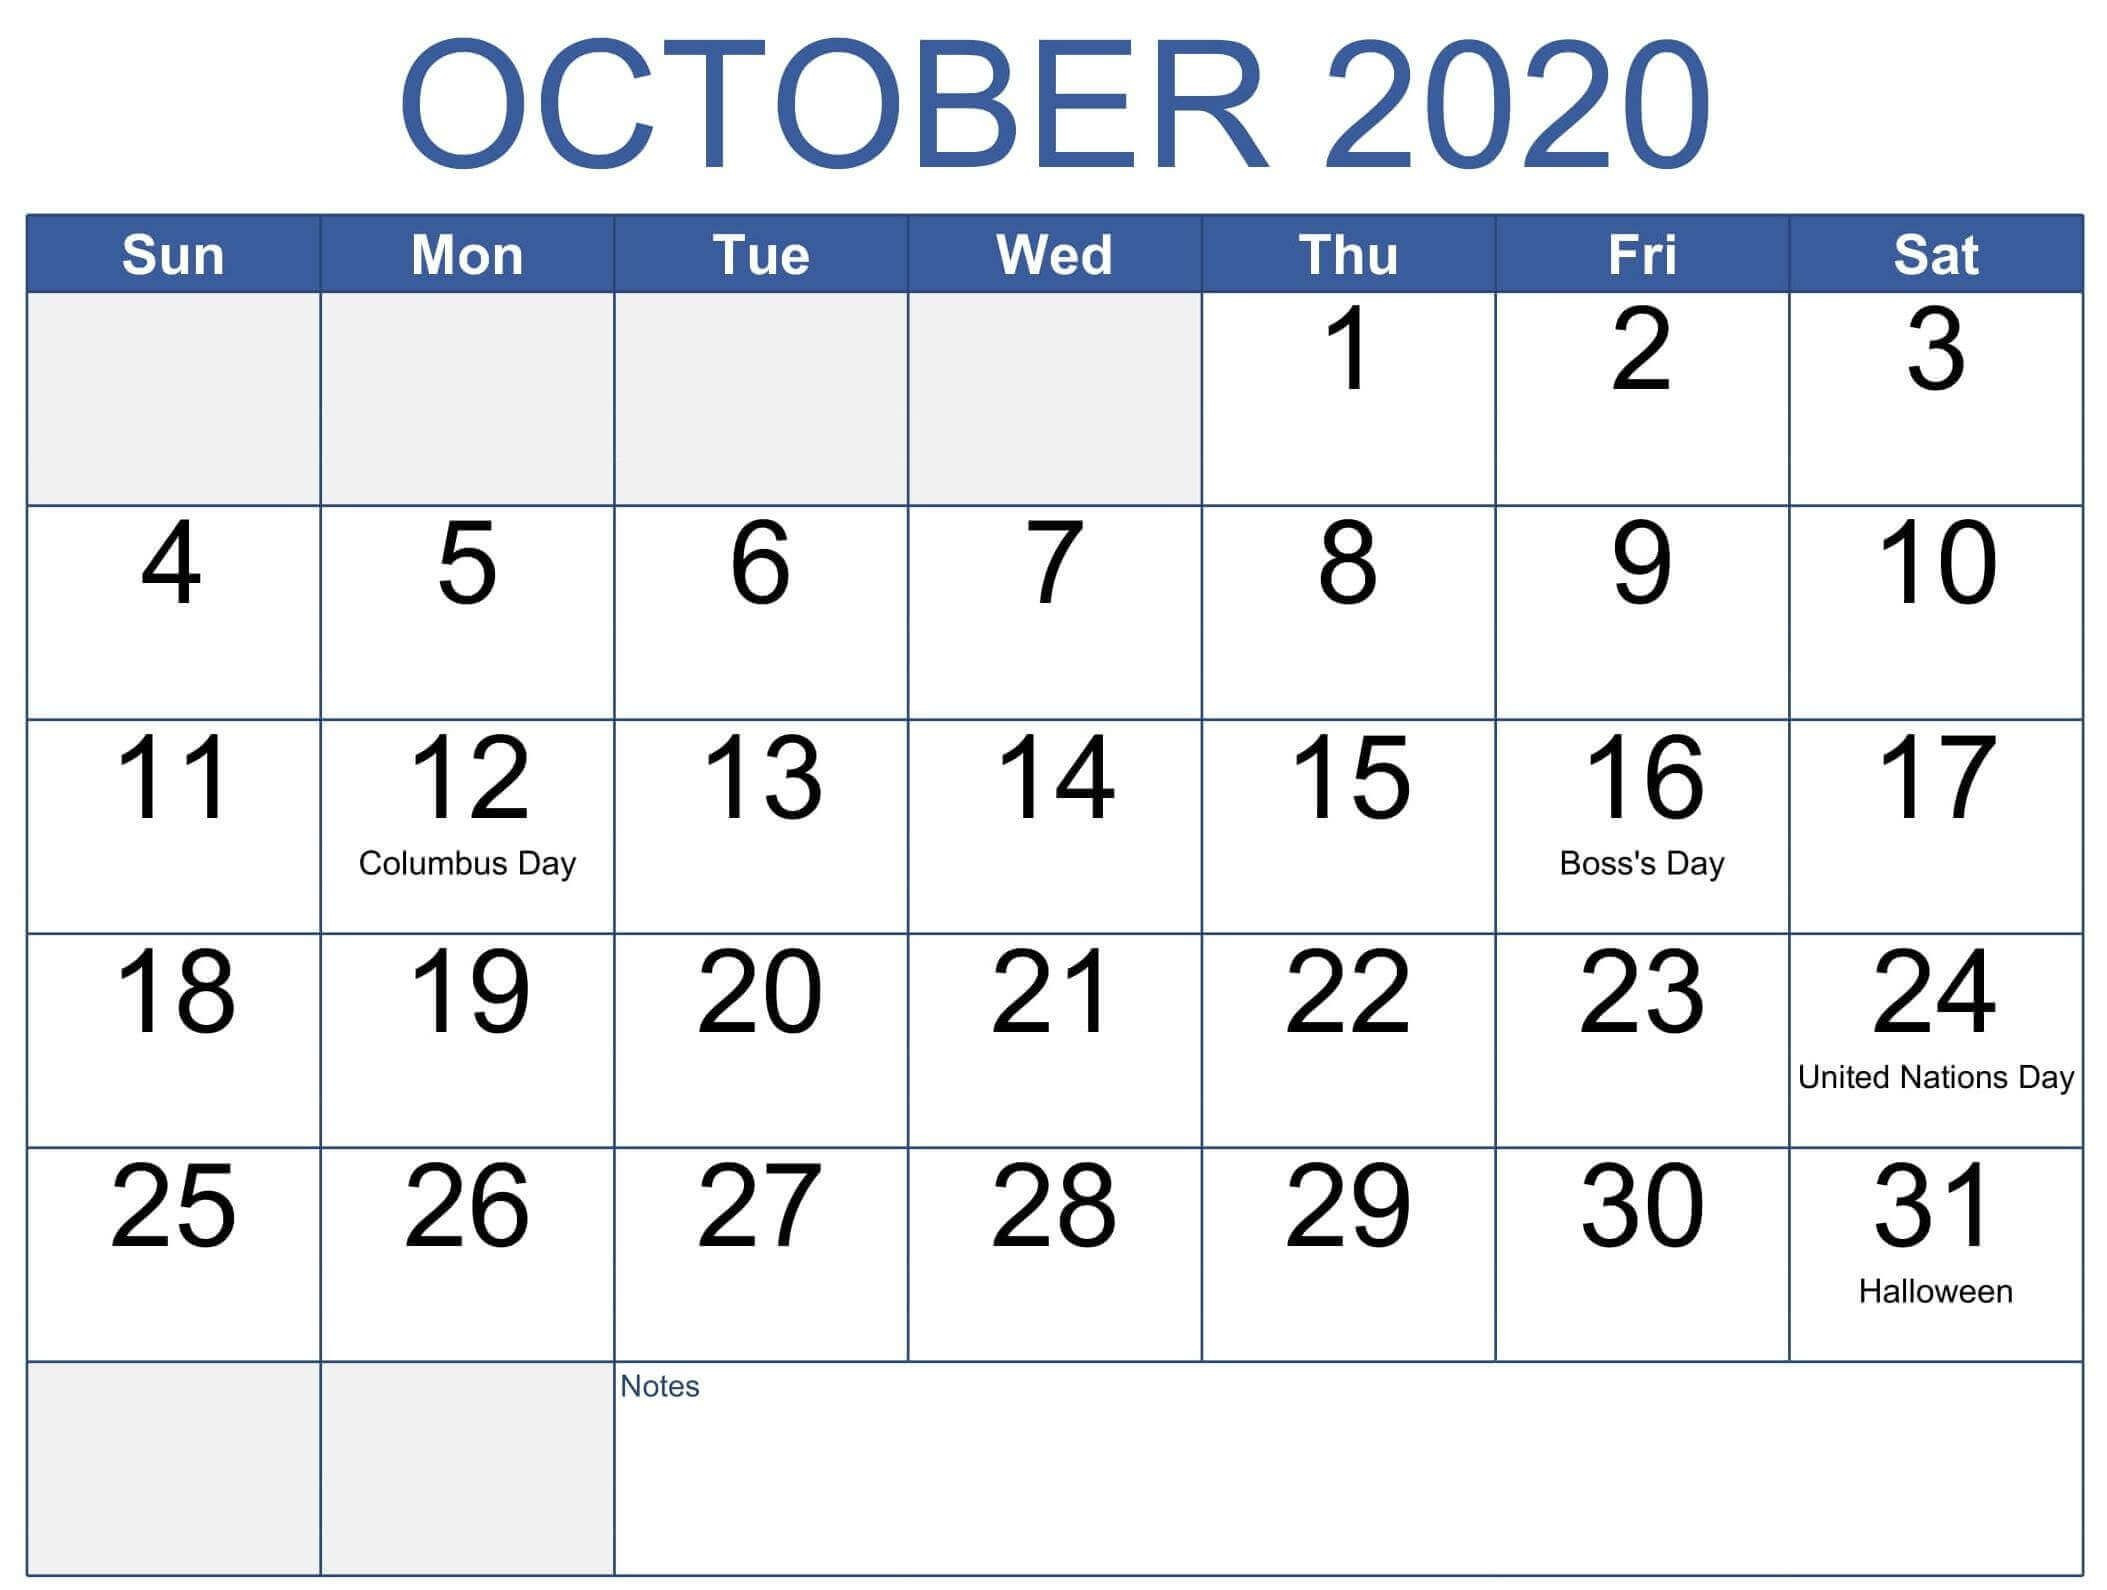 2022 Us Public Holidays - Trutwo-2022 Calendar South Africa With Public Holidays Pdf